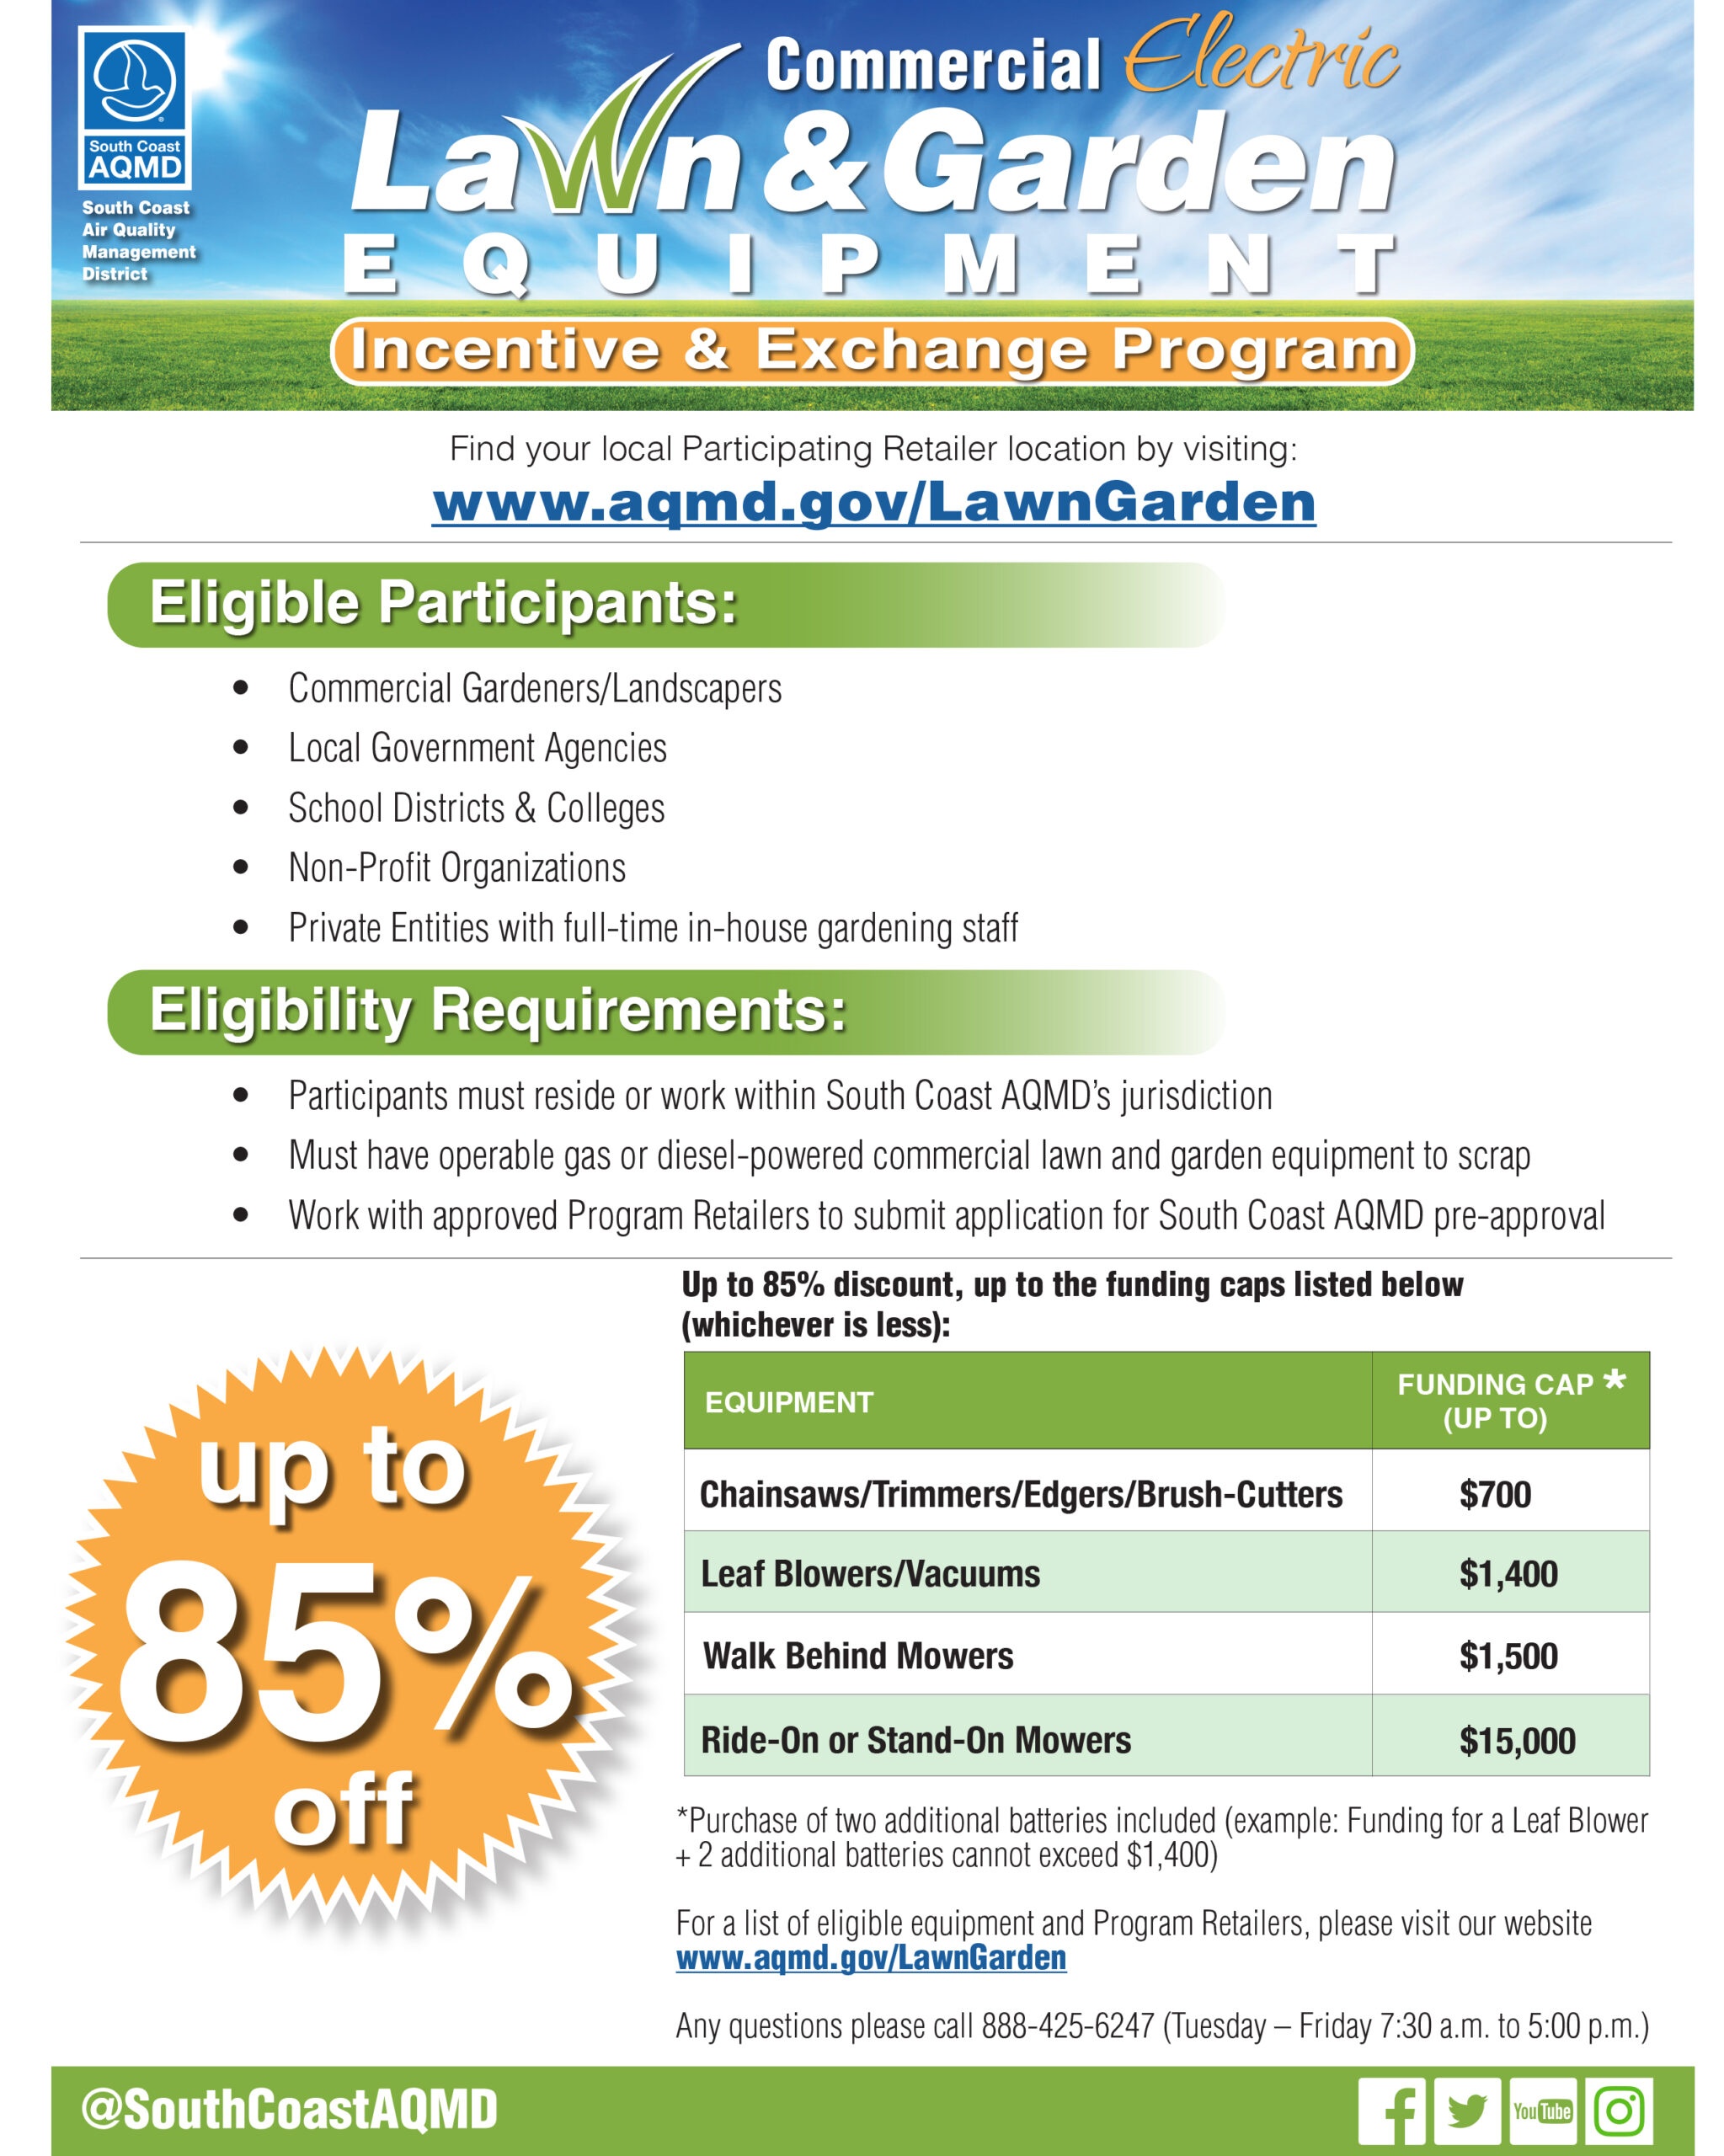 Lawn & Garden Equipment Exchange flyer in Spanish